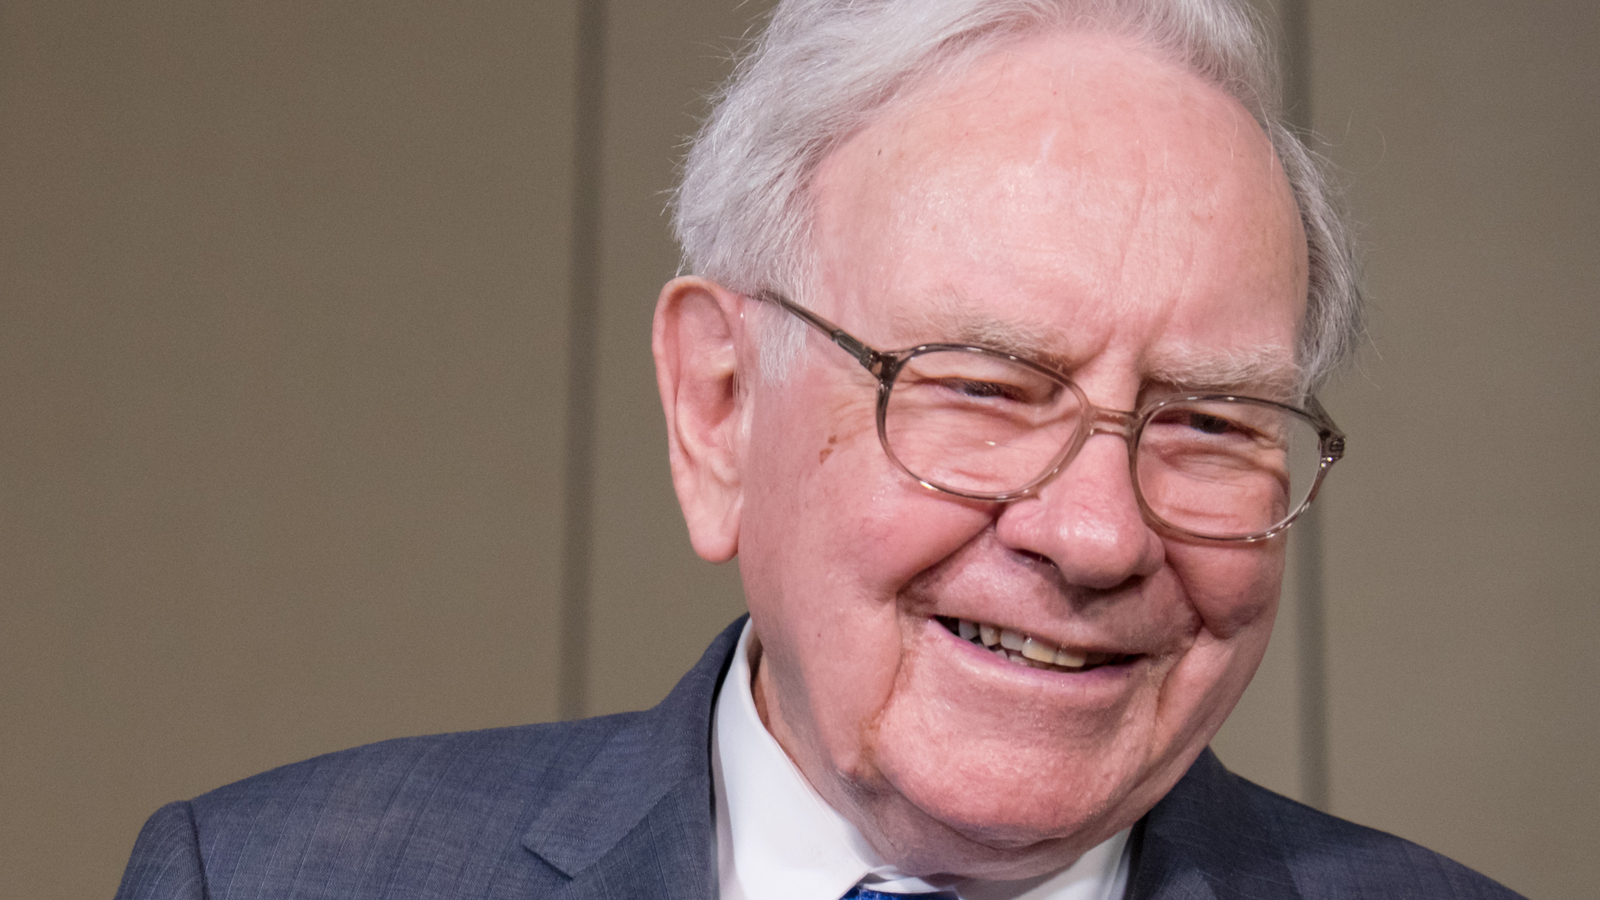 3 Warren Buffett-Approved Dividend Stocks to Buy